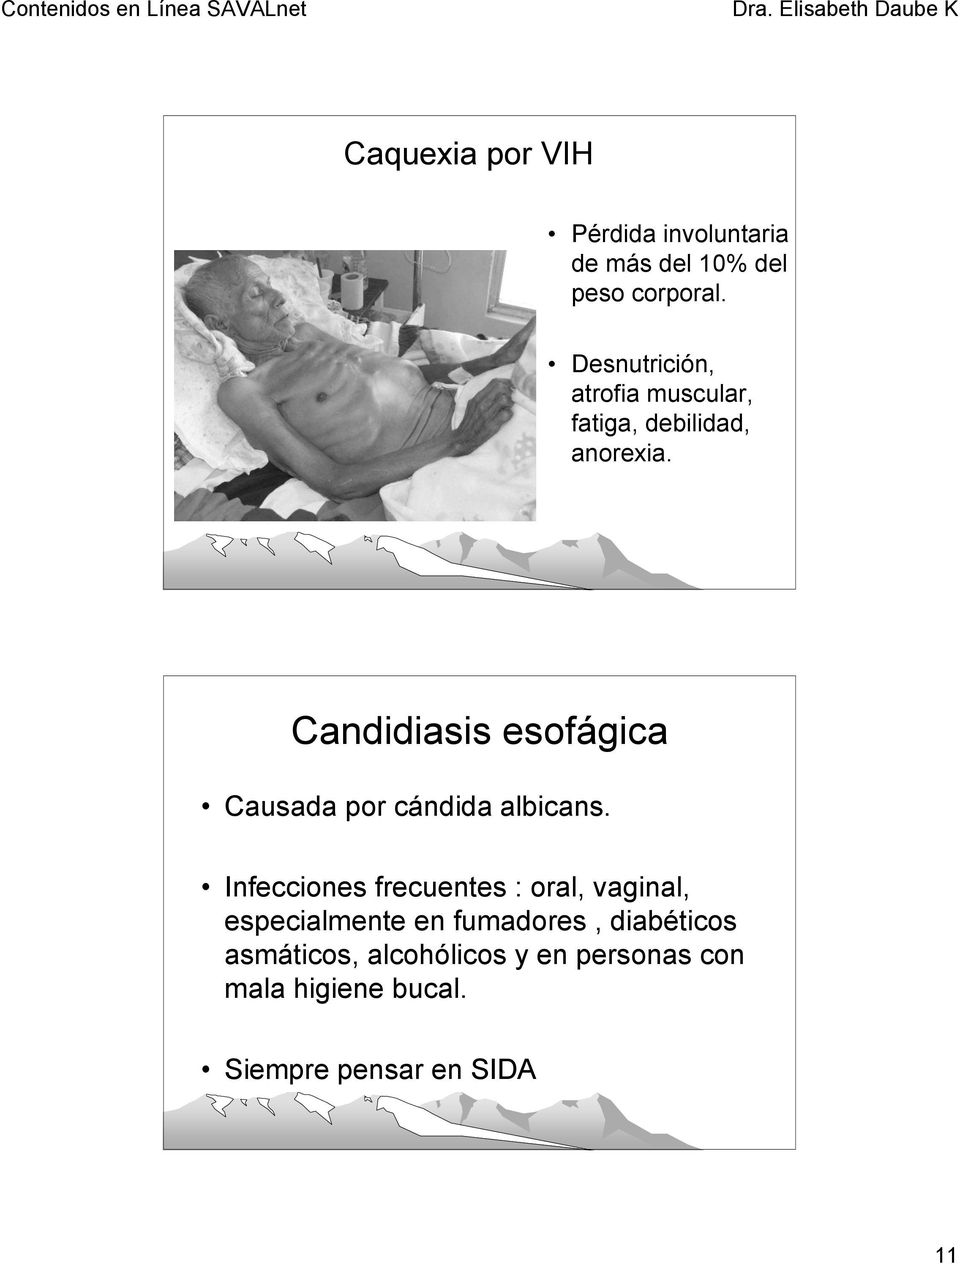 Candidiasis esofágica Causada por cándida albicans.